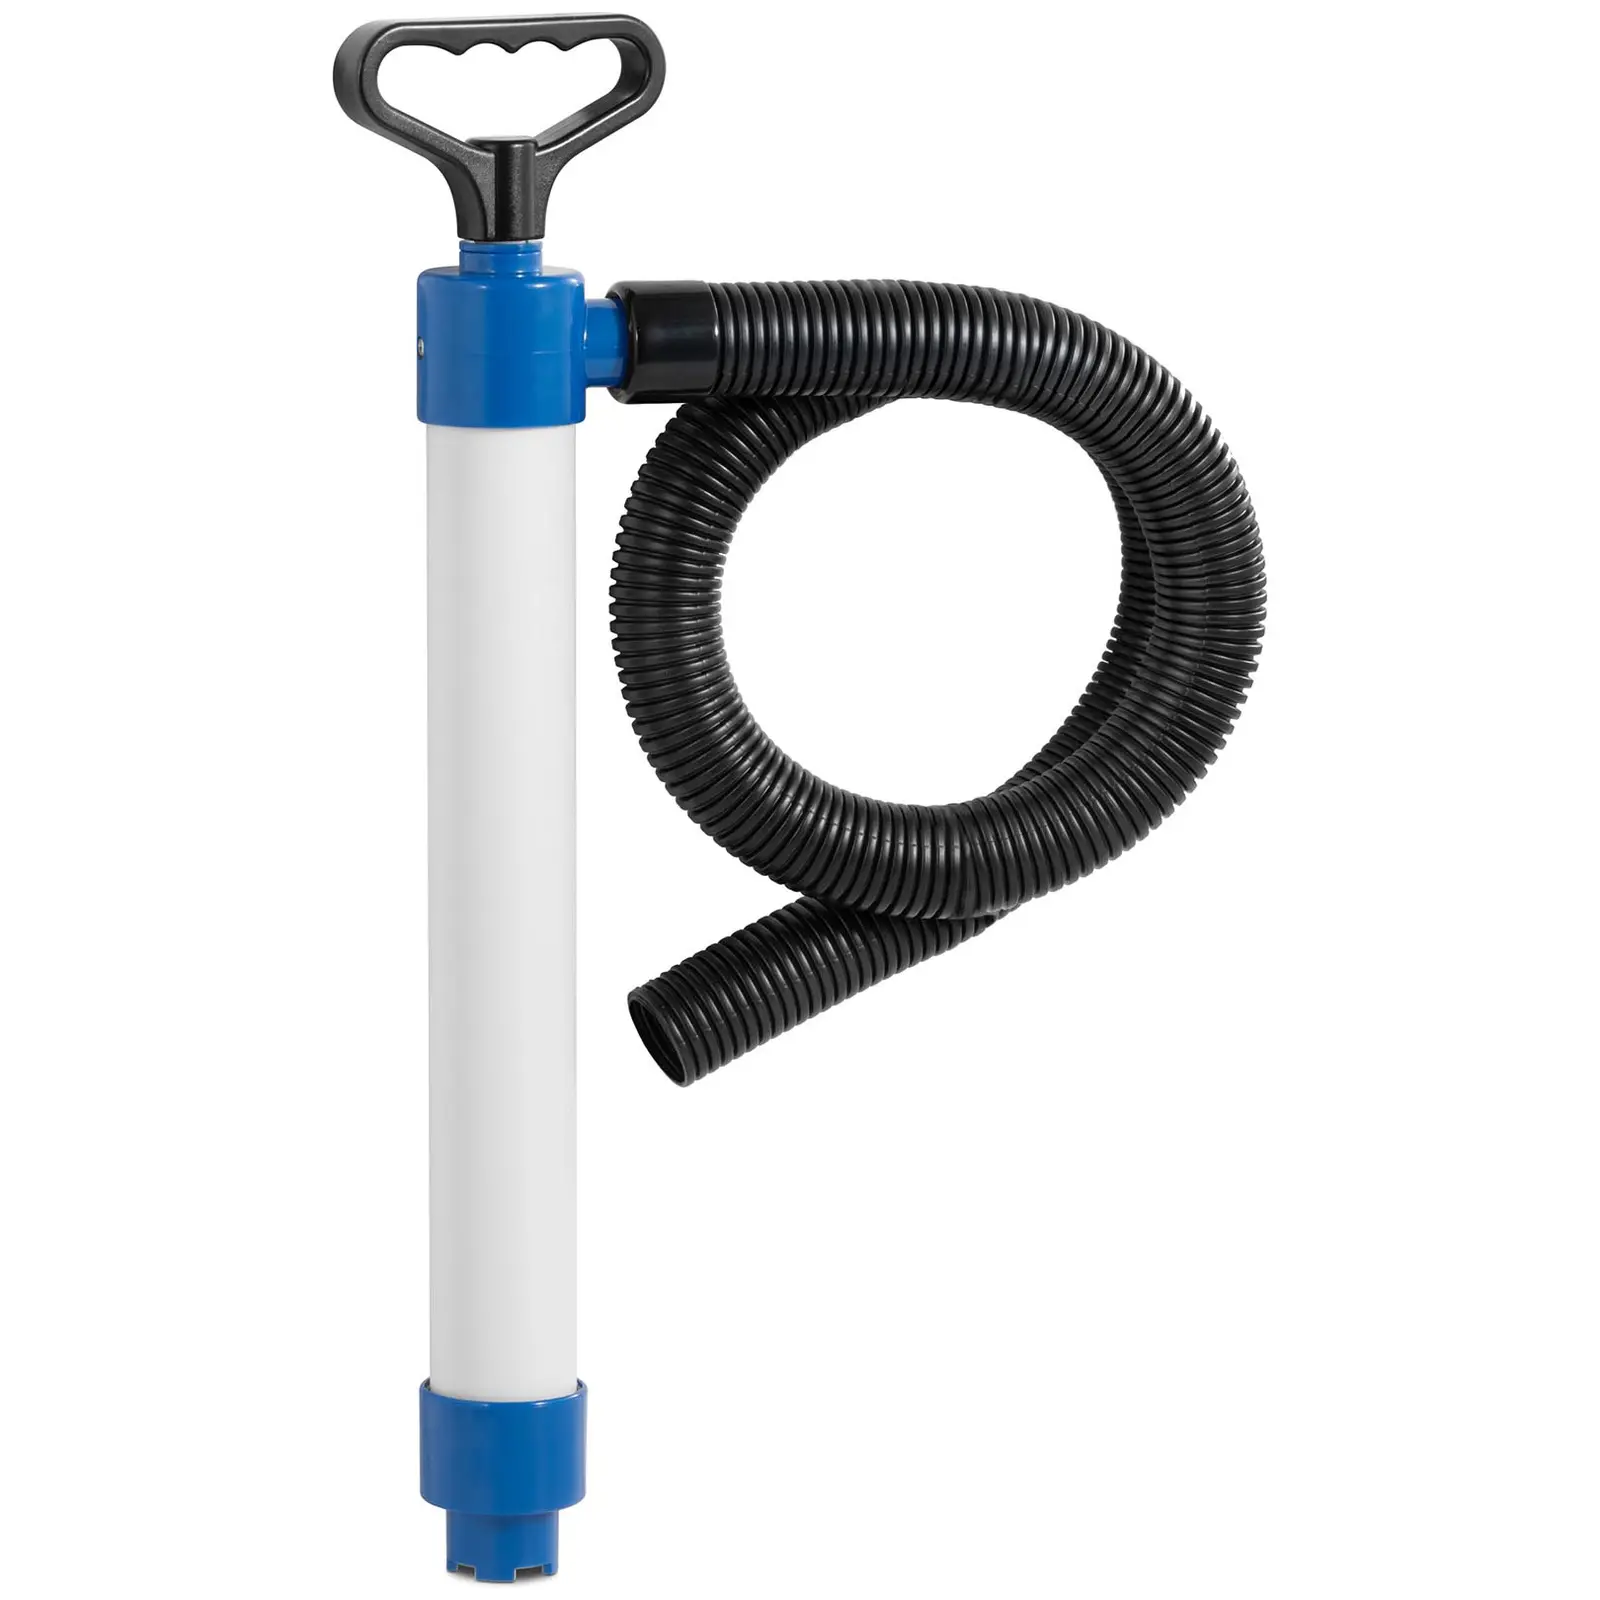 Handwaterpomp lenspomp - 0,5 m opvoerhoogte - 45 l/min debiet - incl. slang